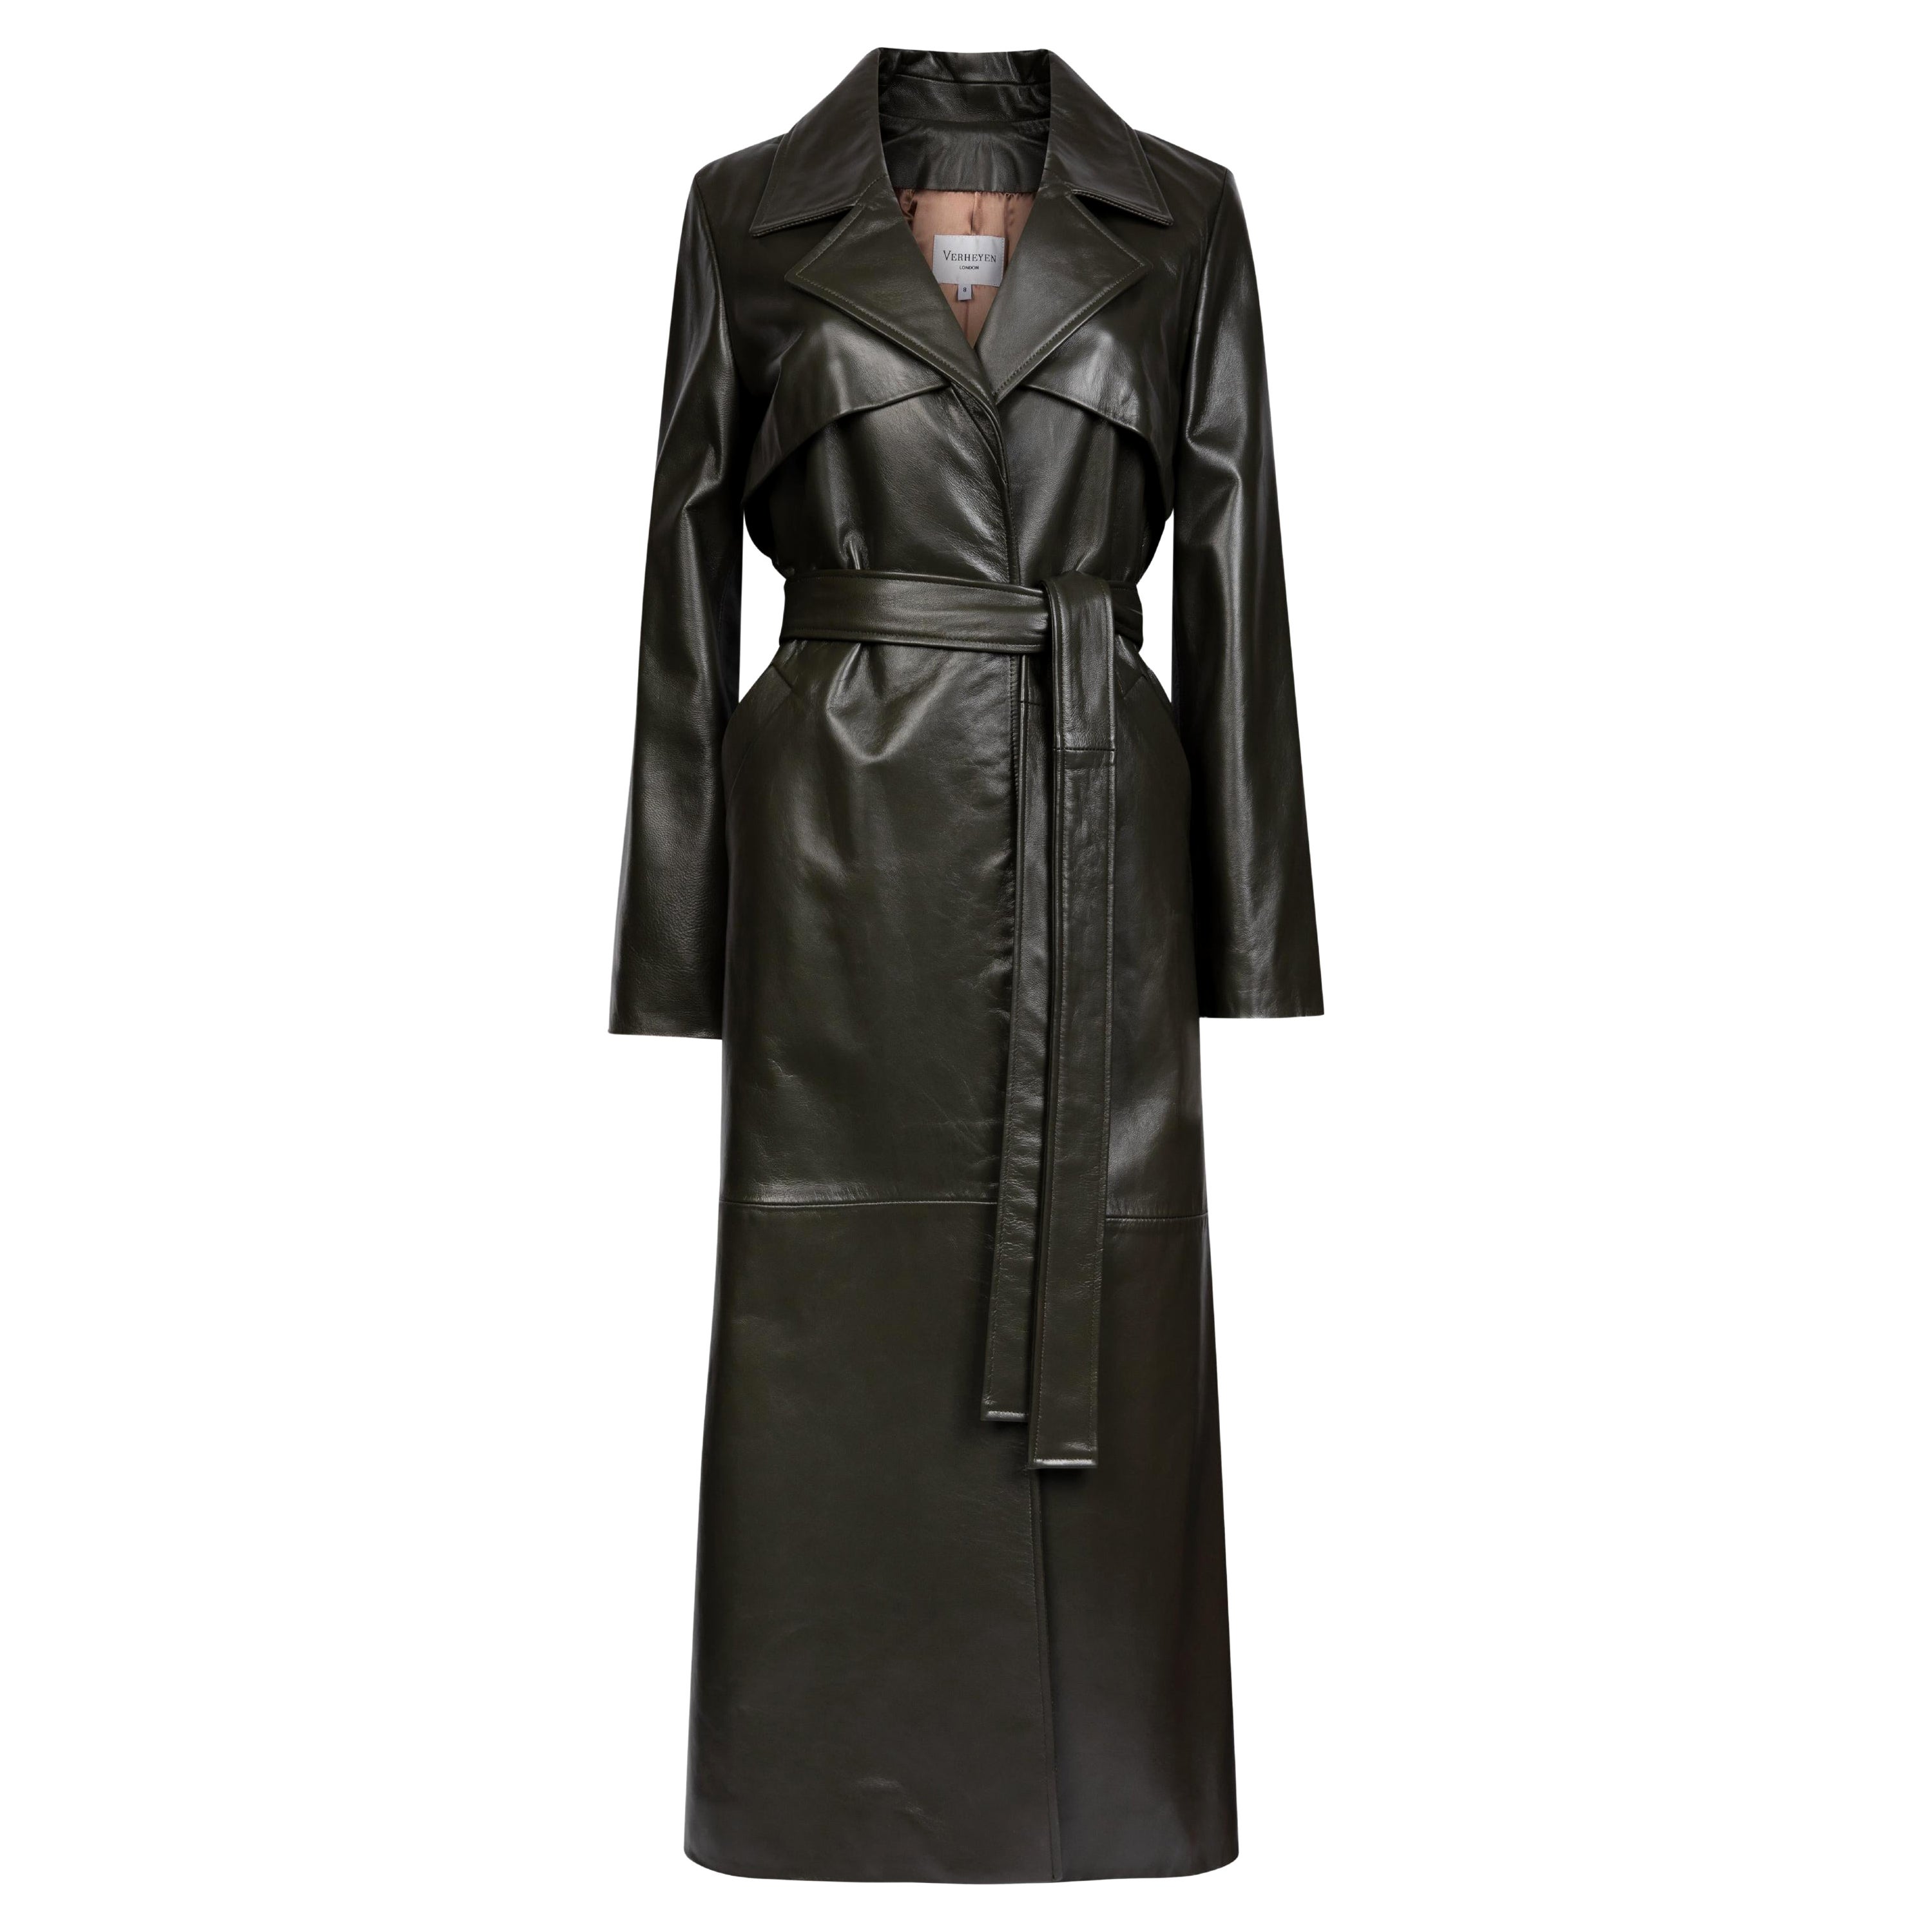 Verheyen London Leather Trench Coat in Dark Khaki Green - Size uk 14 For Sale